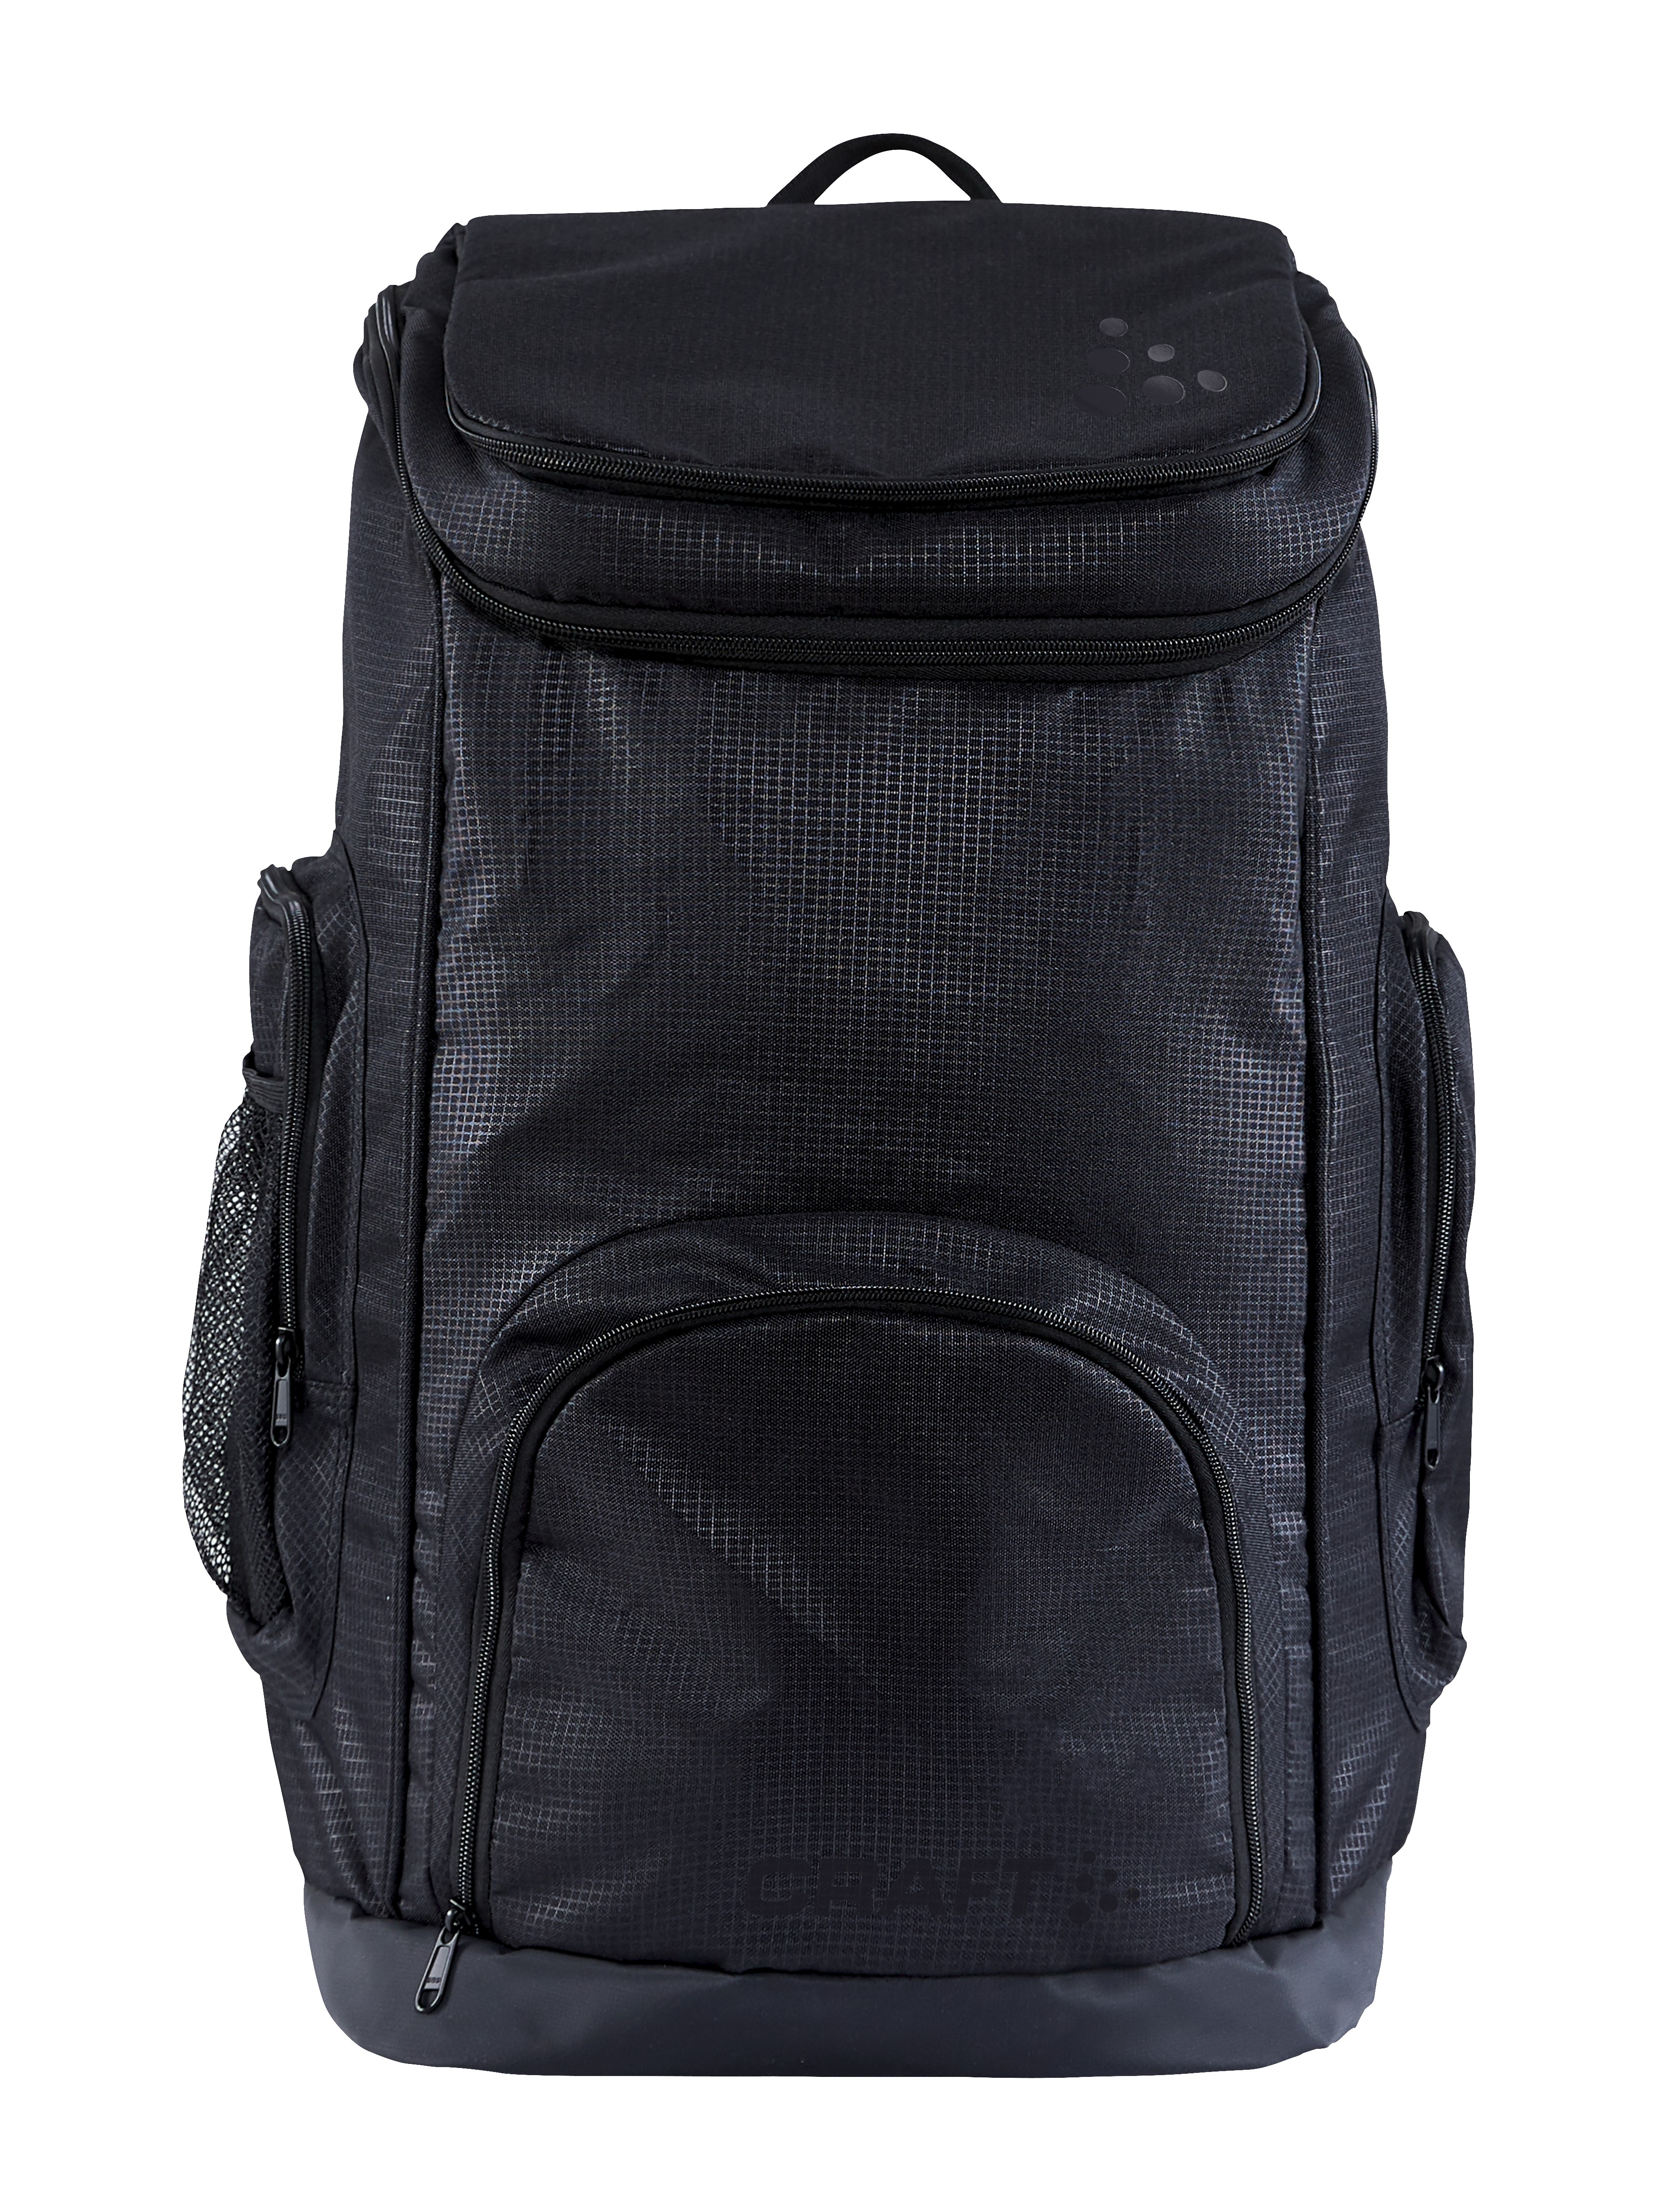 EQUIPMENT L 65 | Black - Sportswear TRANSIT BAG Craft